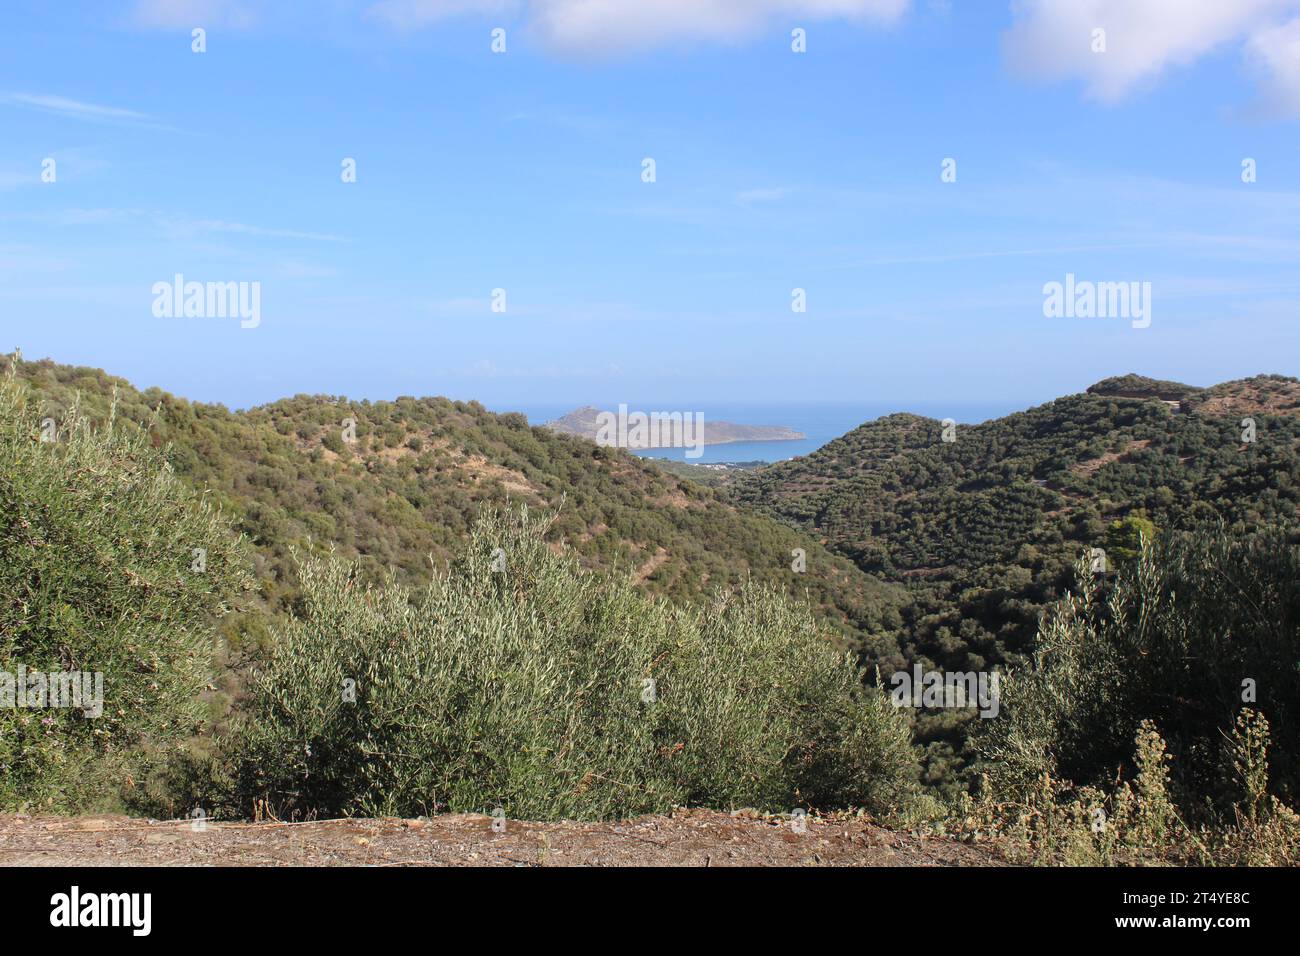 Walking in Crete - View towards Agioi Theodoroi island off the coast at Agia Marina, Crete, Greece Stock Photo